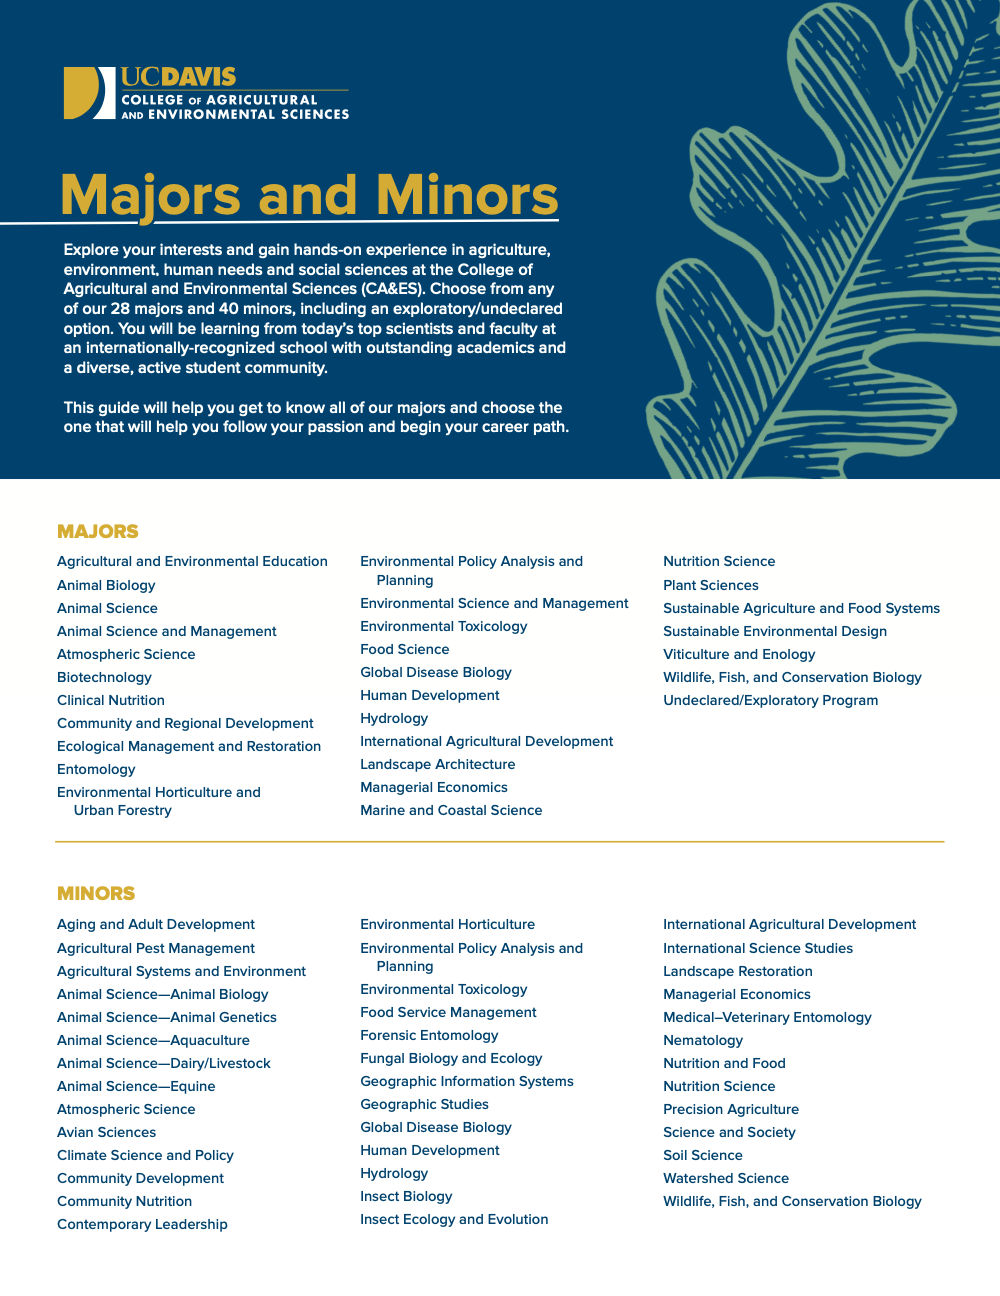 Cover of majors brochure